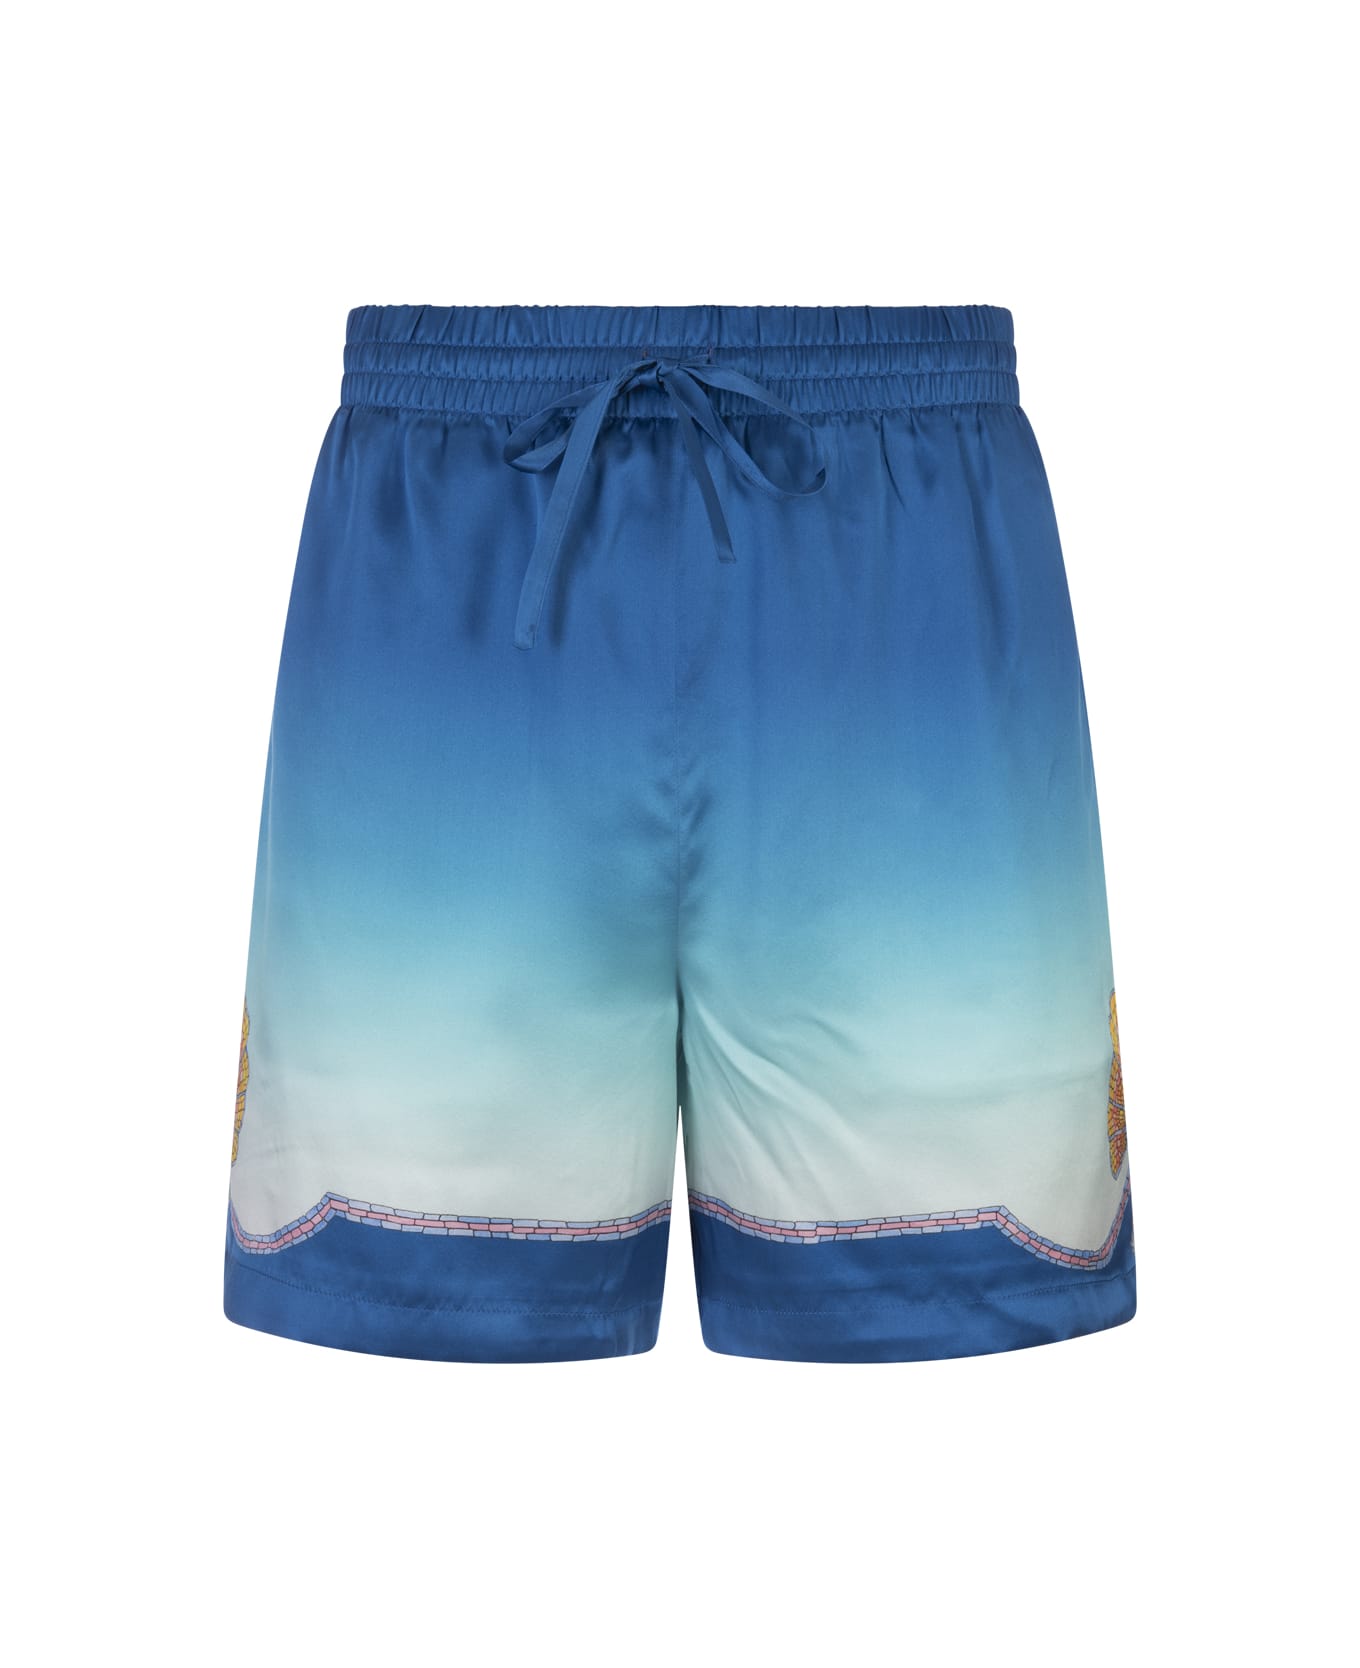 Casablanca Coquillage Coloré Silk Shorts - Blue